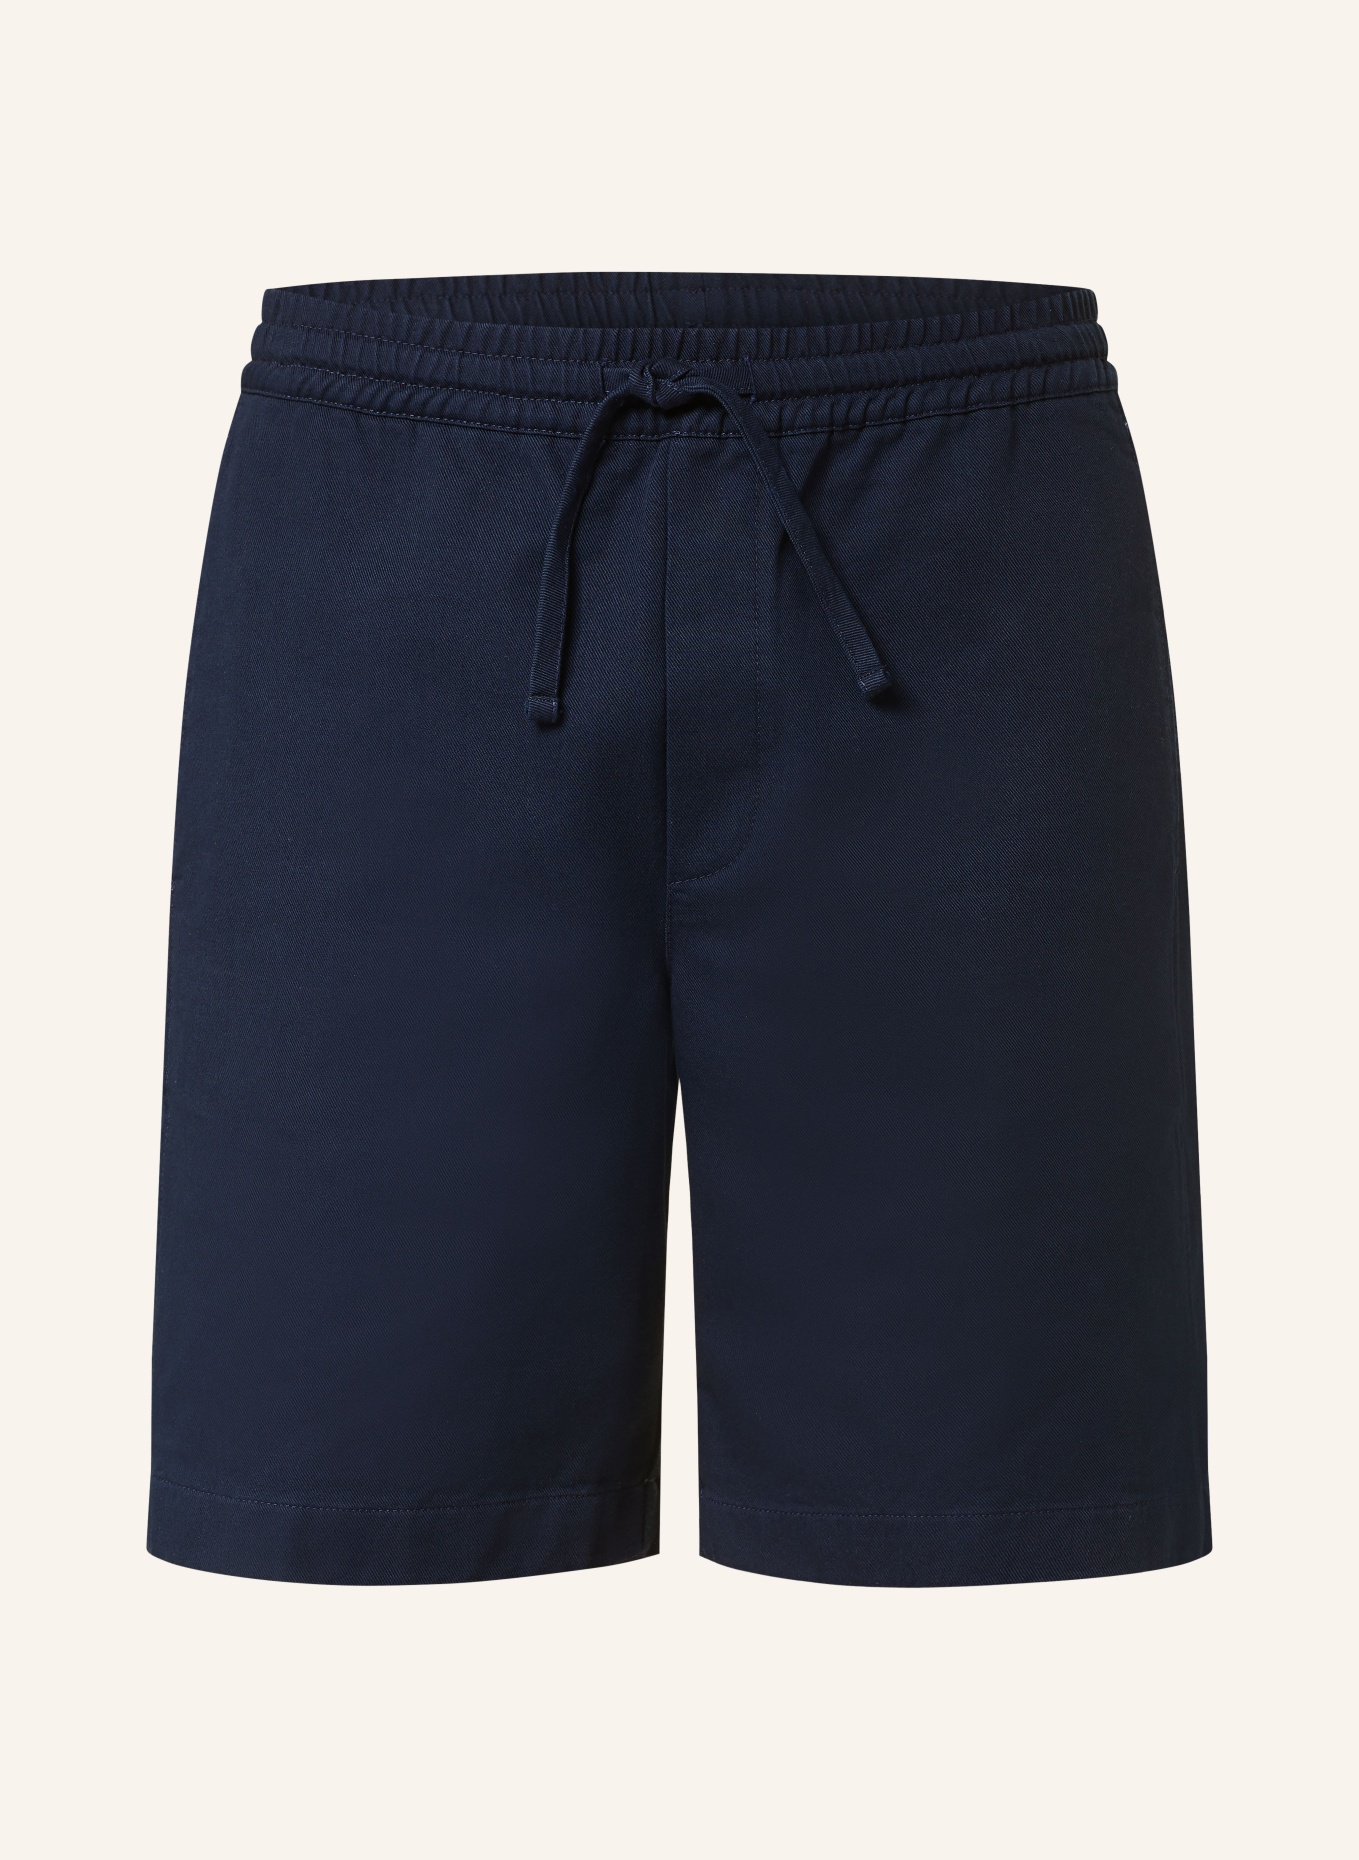 MAERZ MUENCHEN Shorts, Farbe: DUNKELBLAU (Bild 1)